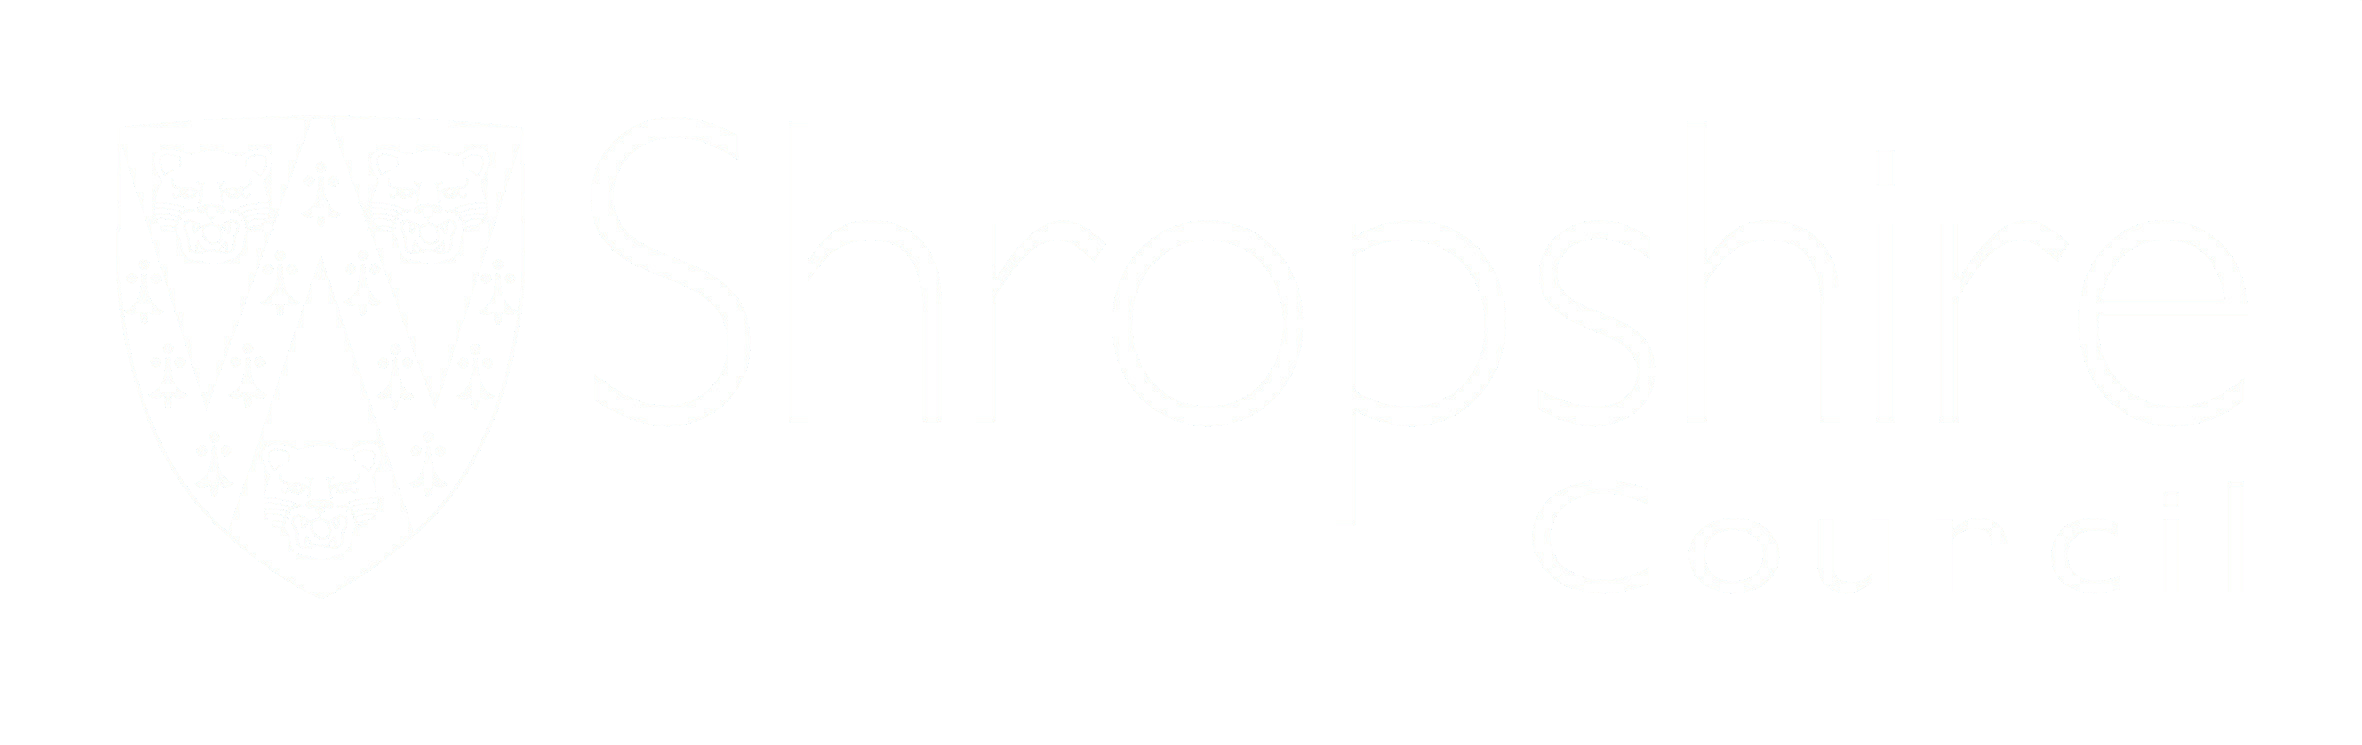 Shropshire Council Logo | King's Awards for Shropshire